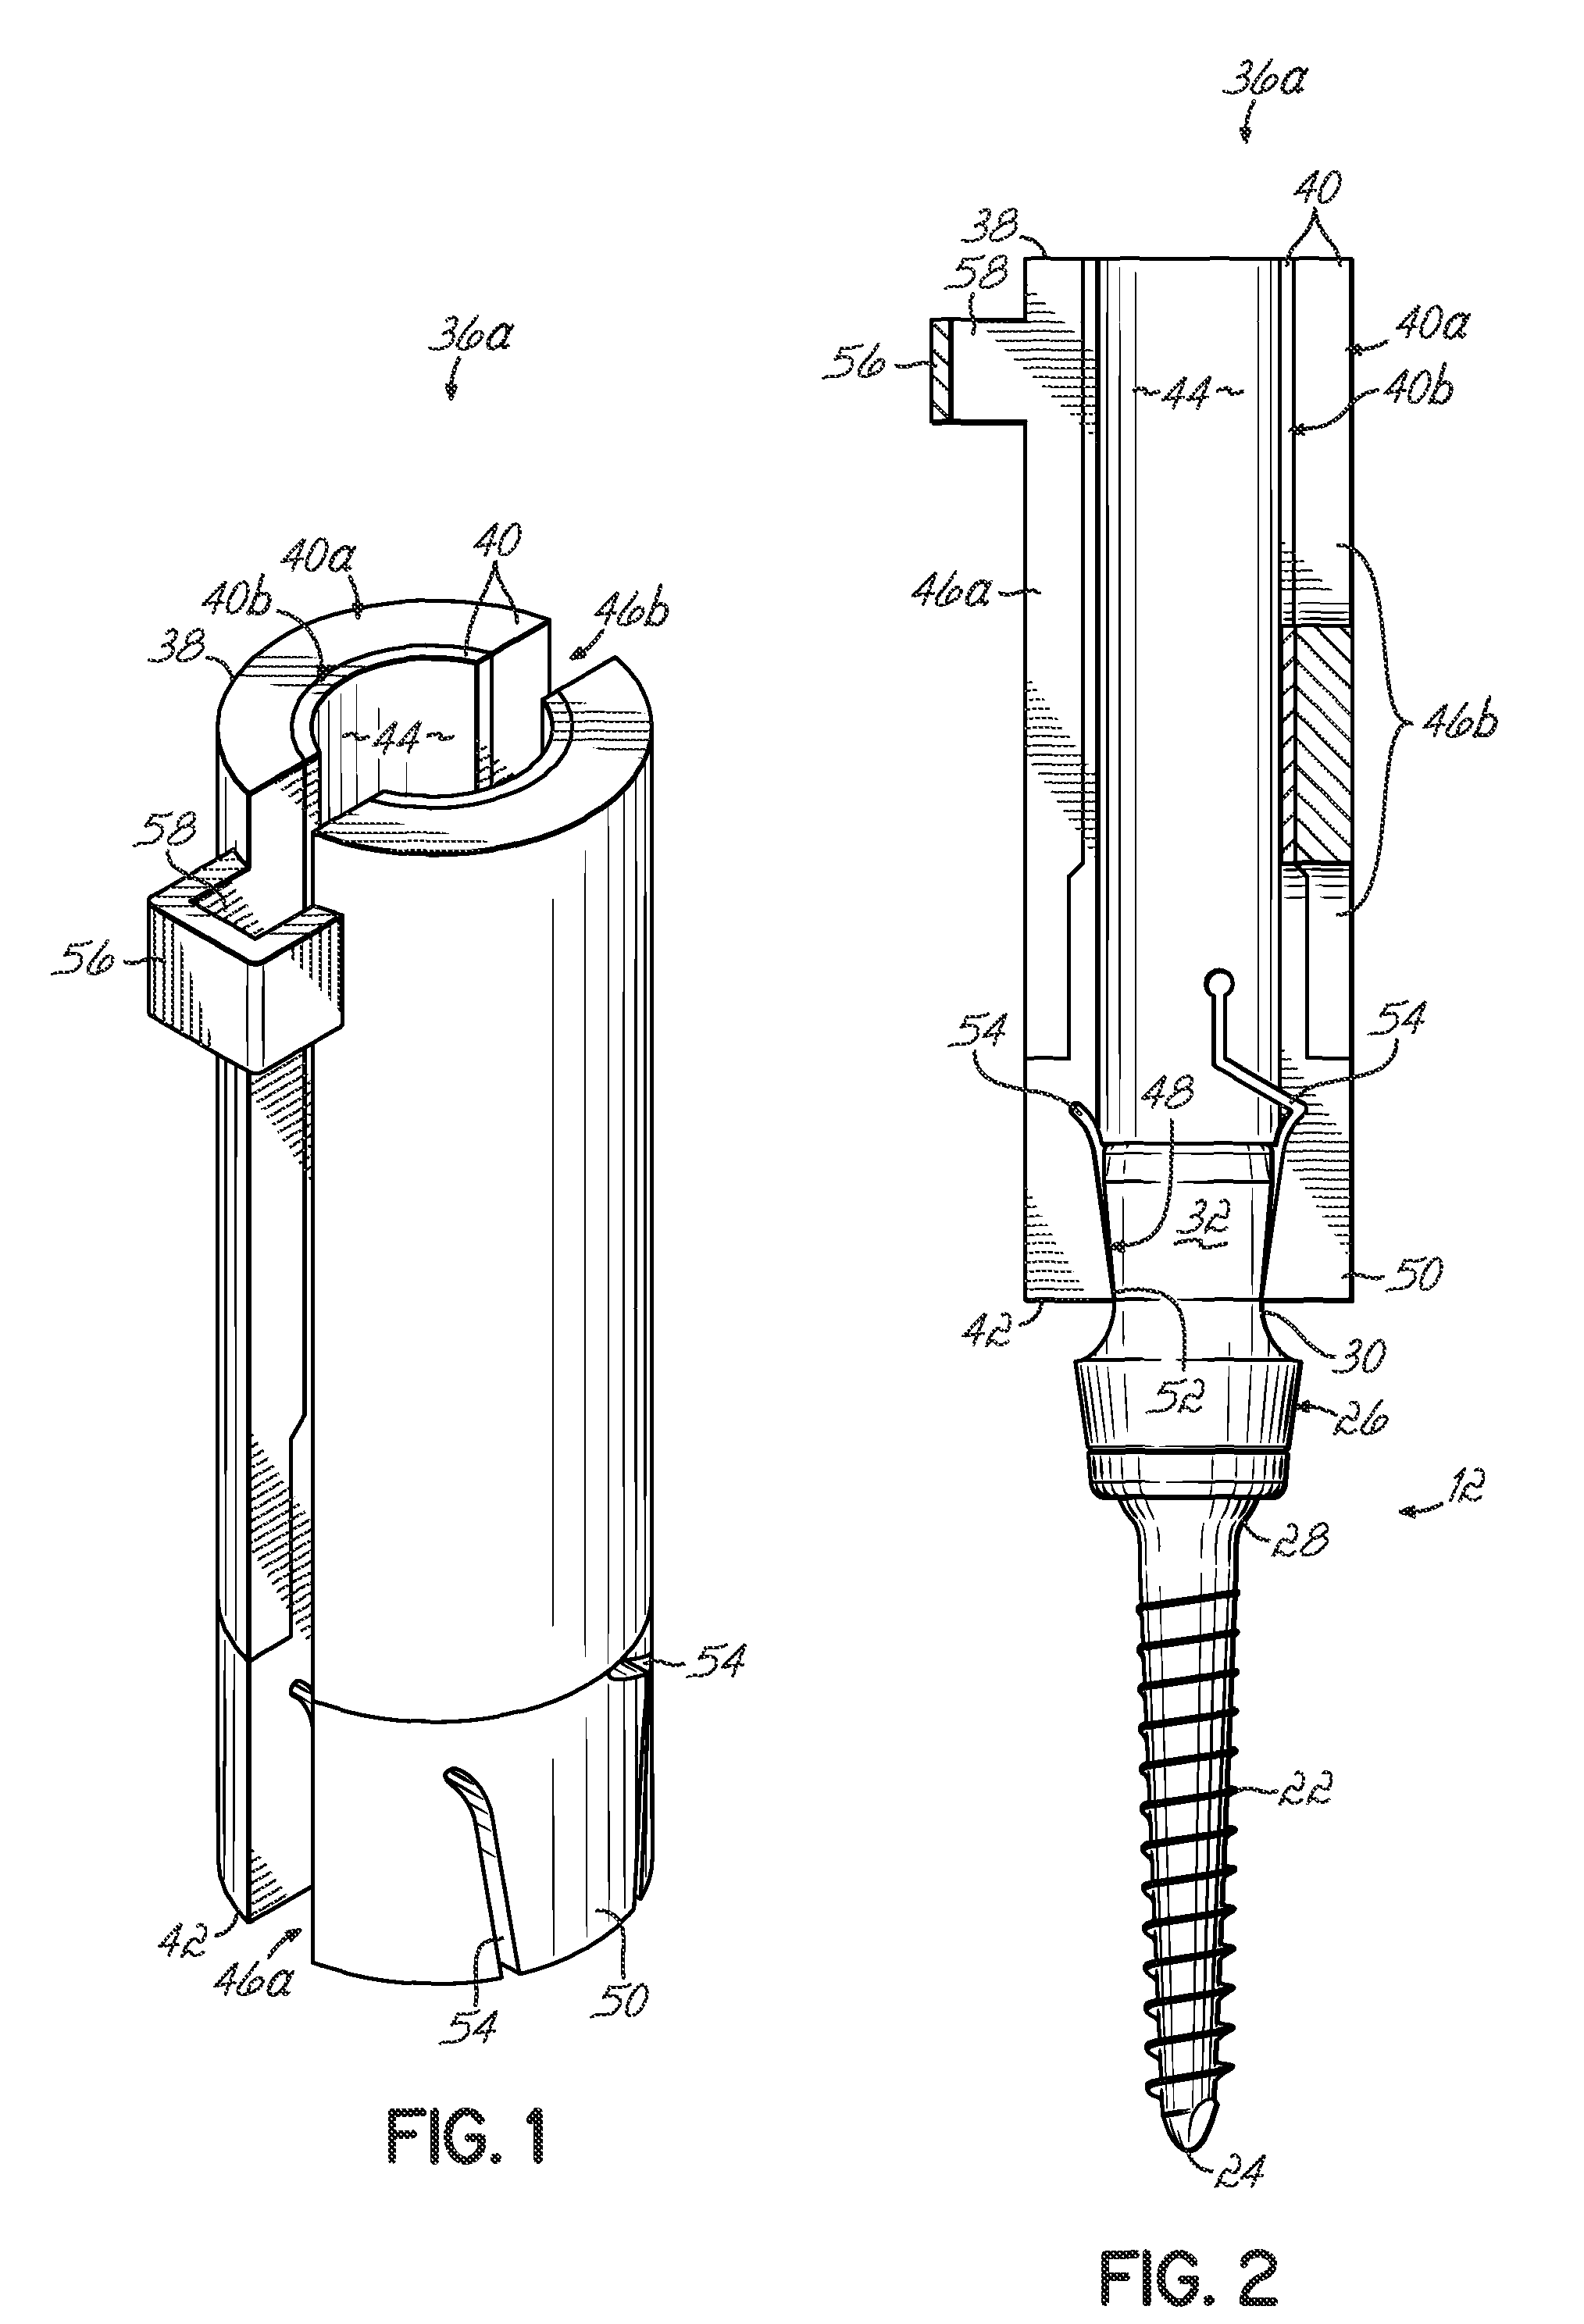 Instrumentation and associated techniques for minimally invasive vertebral rod installation